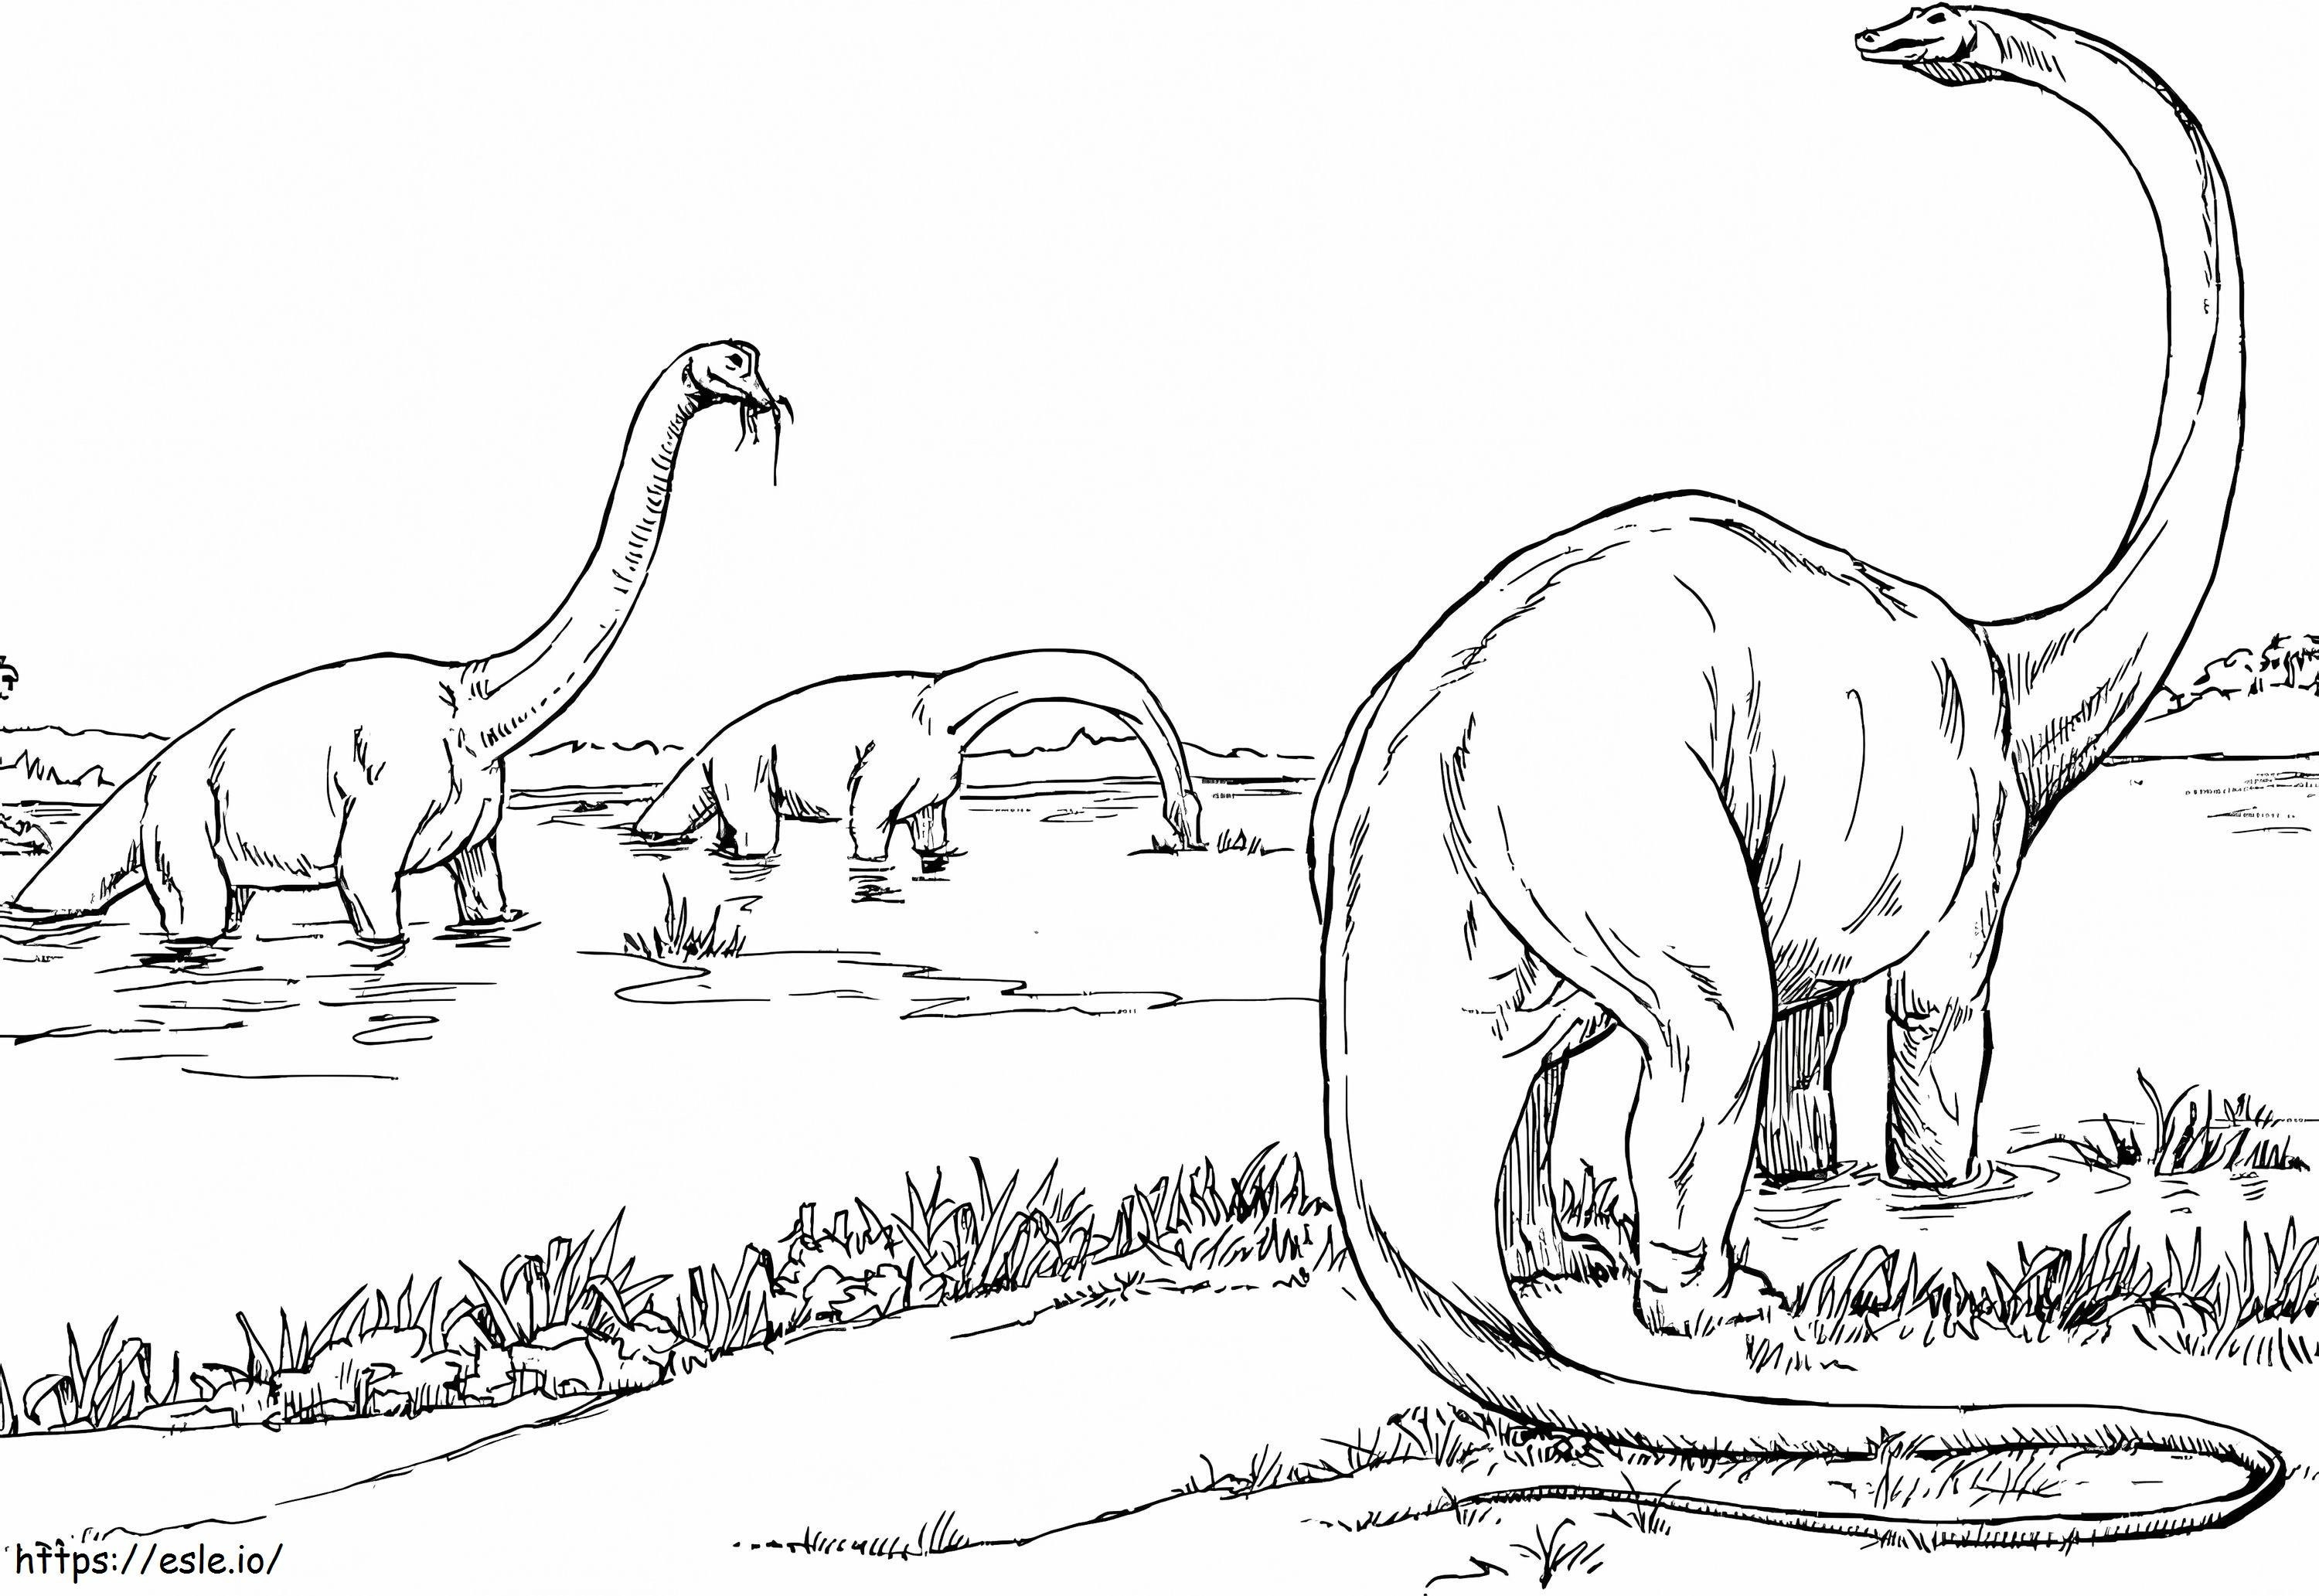 Brachiosaurus 2 coloring page